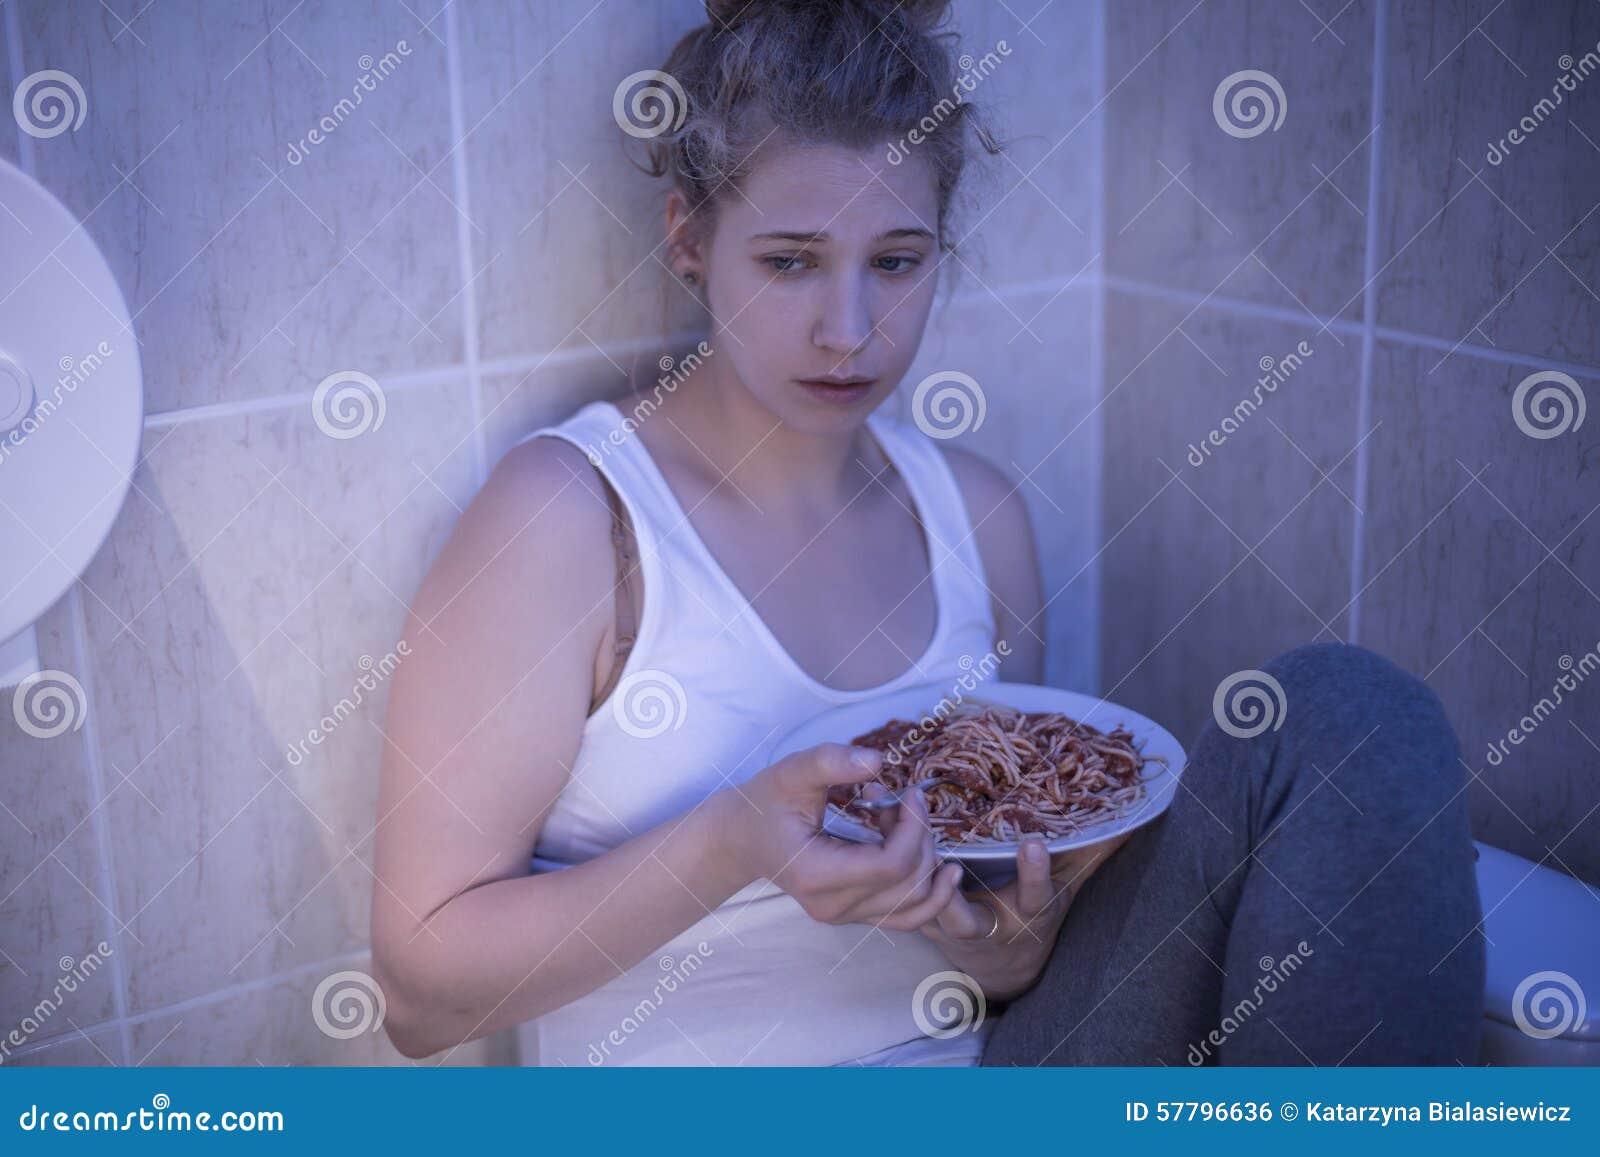 overeating sad girl